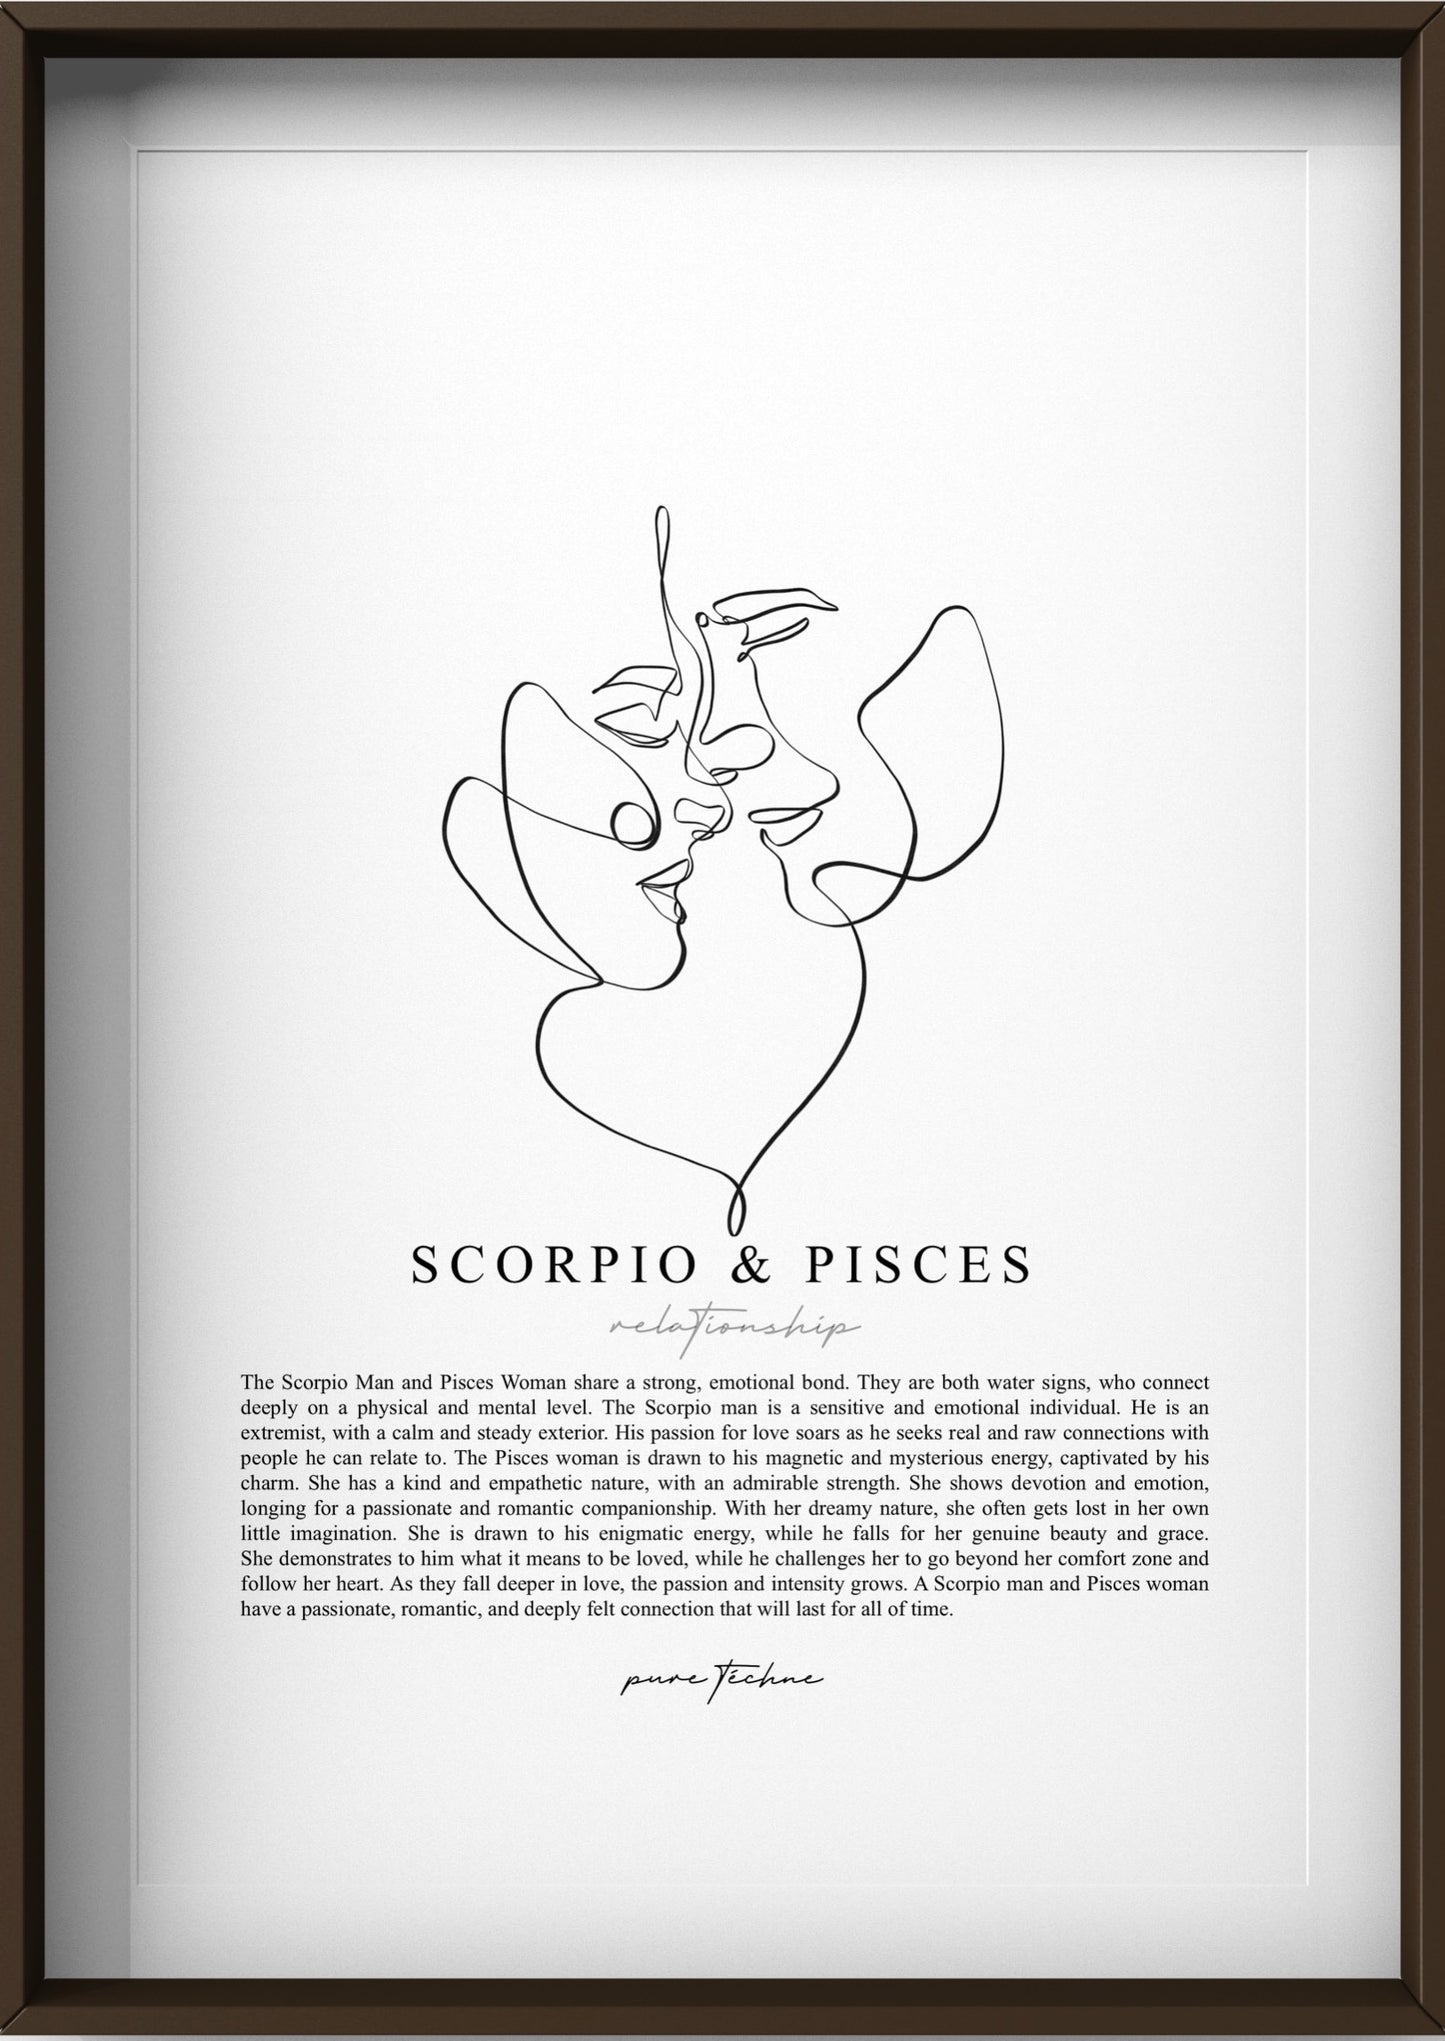 Scorpio Man & Pisces Woman